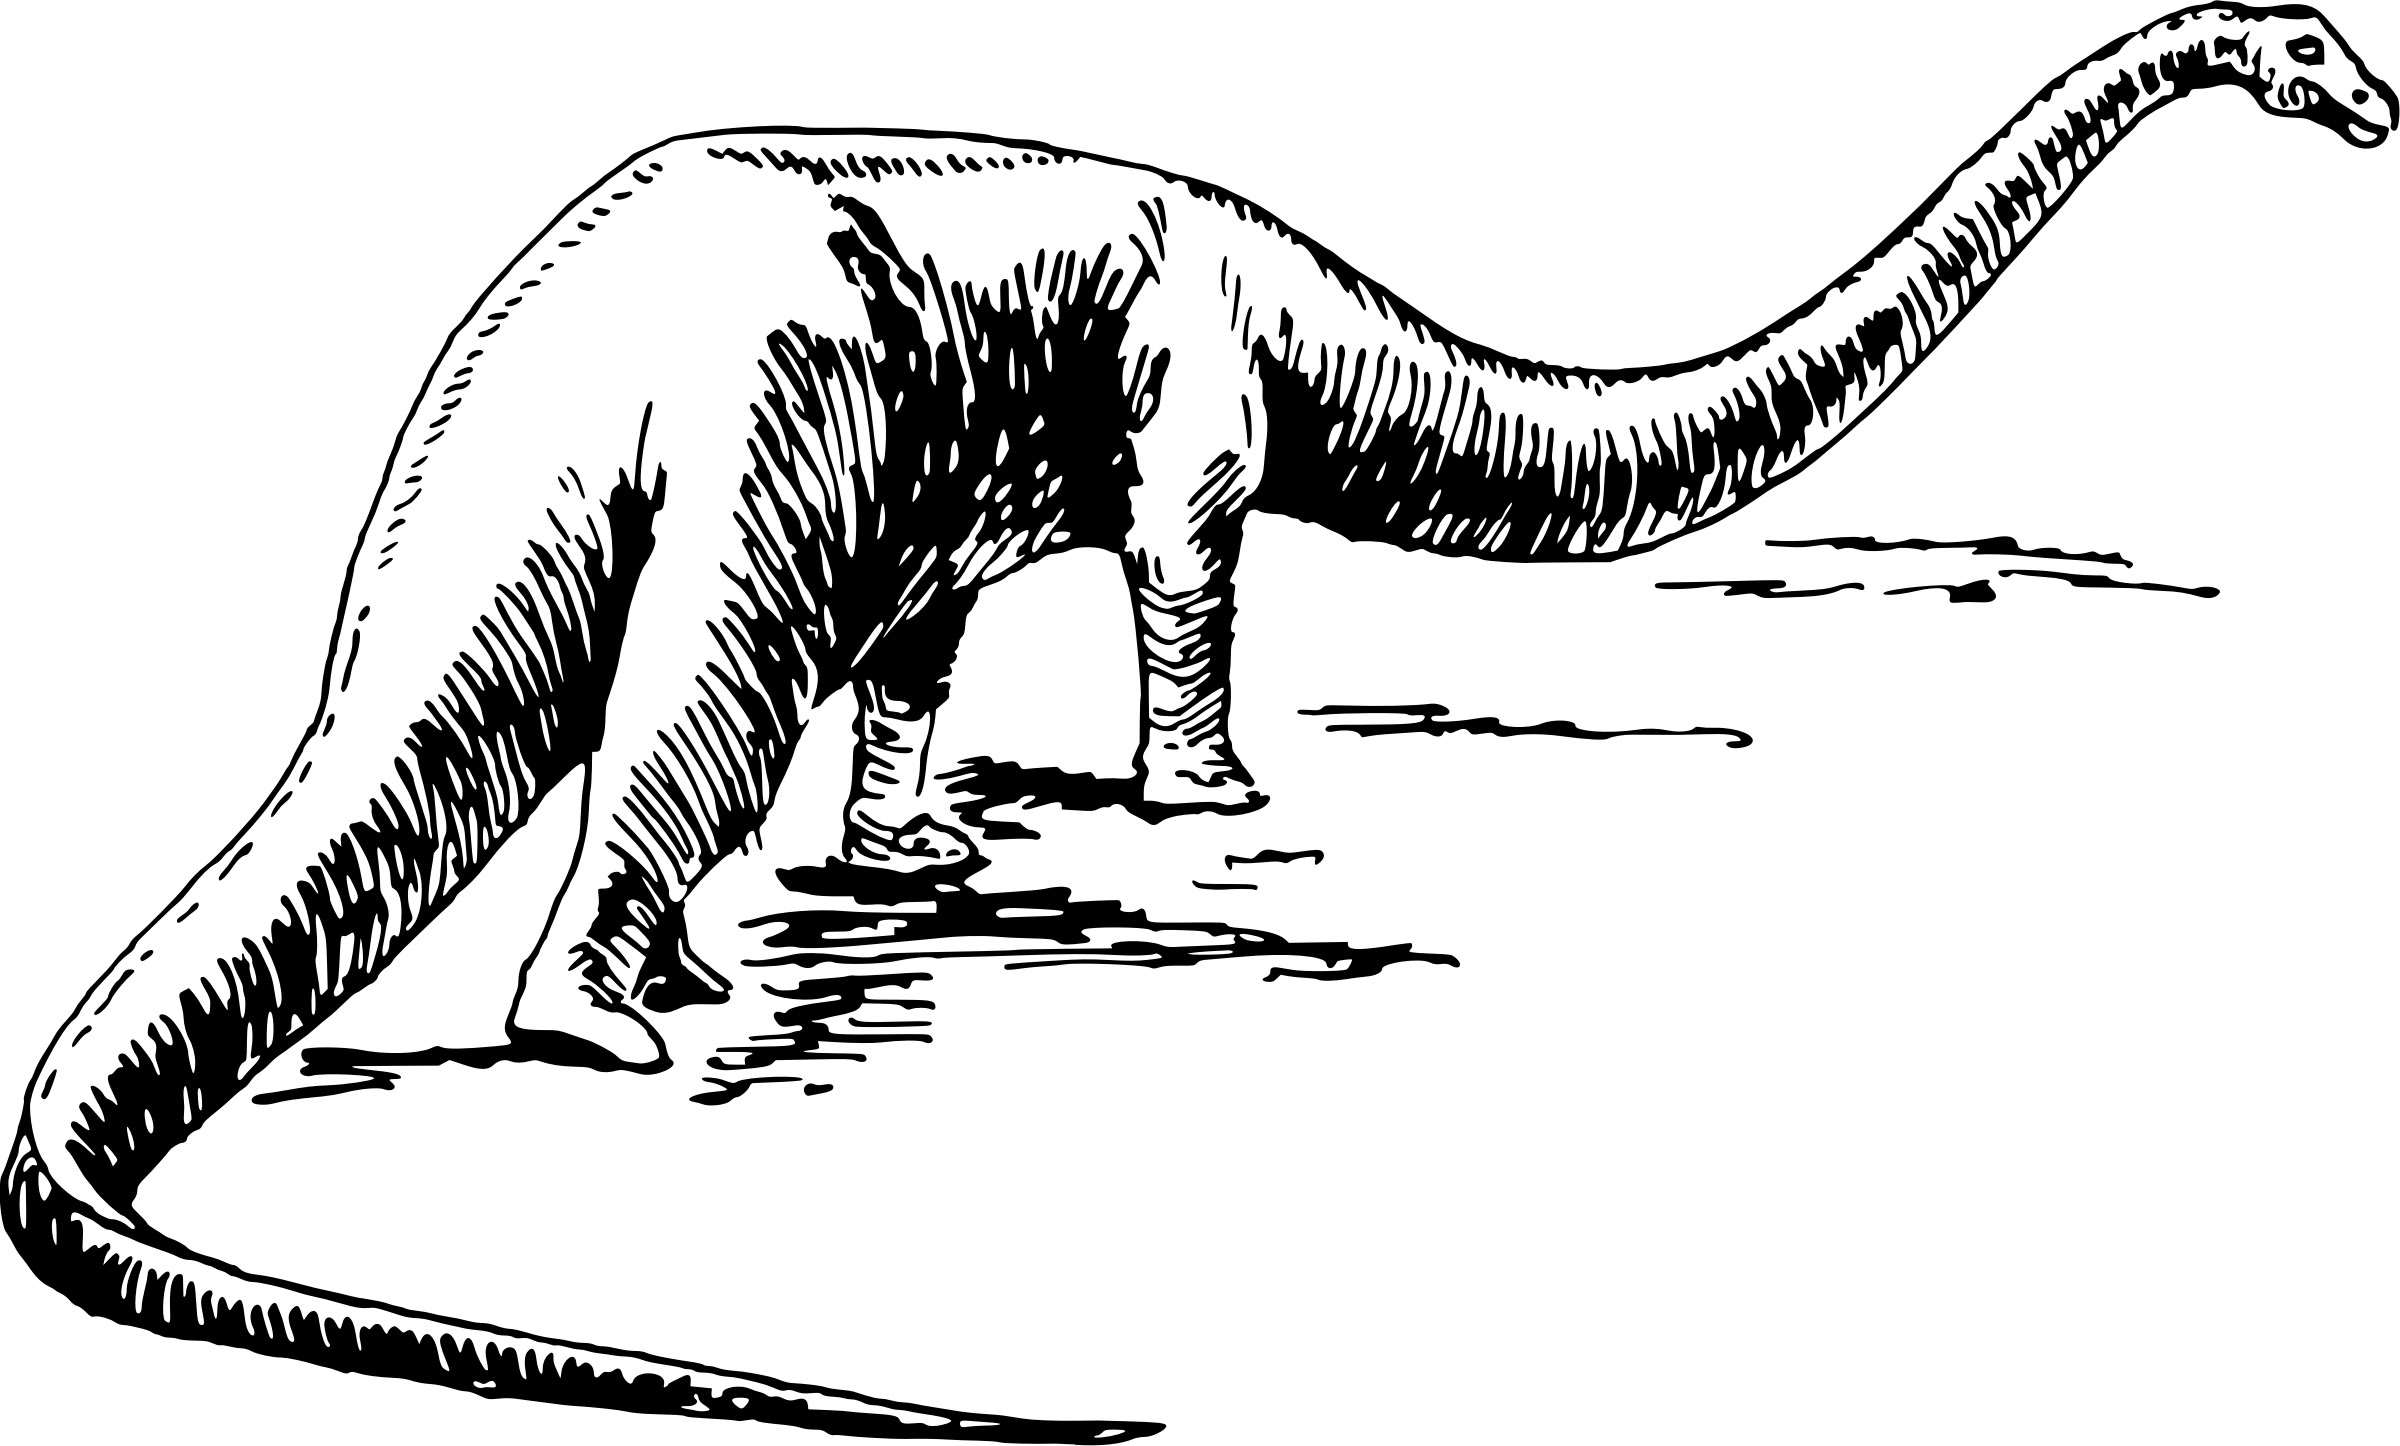 Large Sauropod Dinosaur vector clipart image.